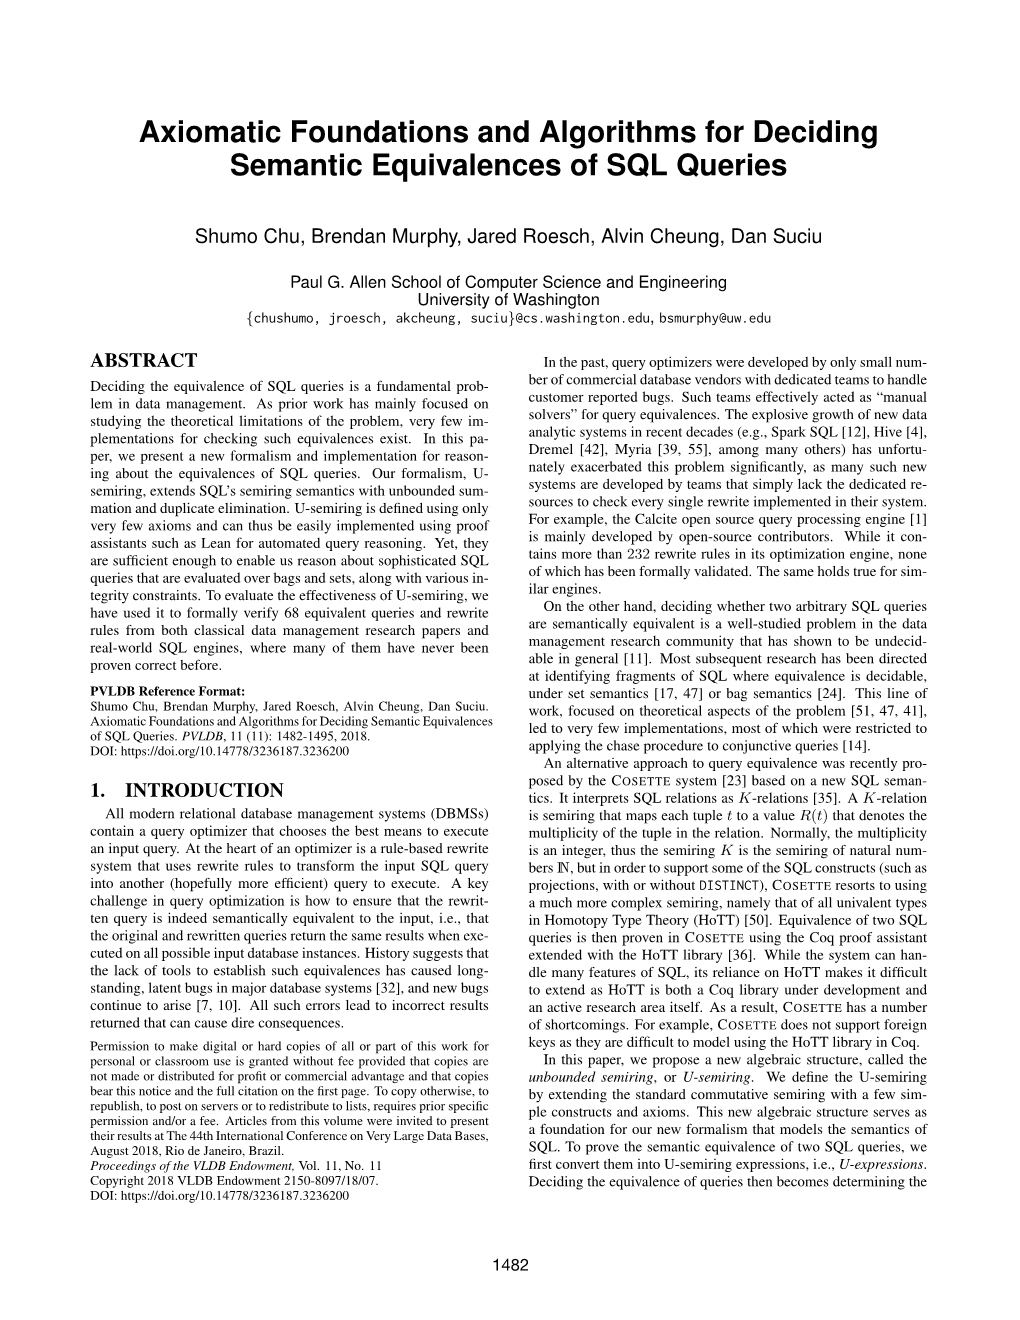 Axiomatic Foundations and Algorithms for Deciding Semantic Equivalences of SQL Queries